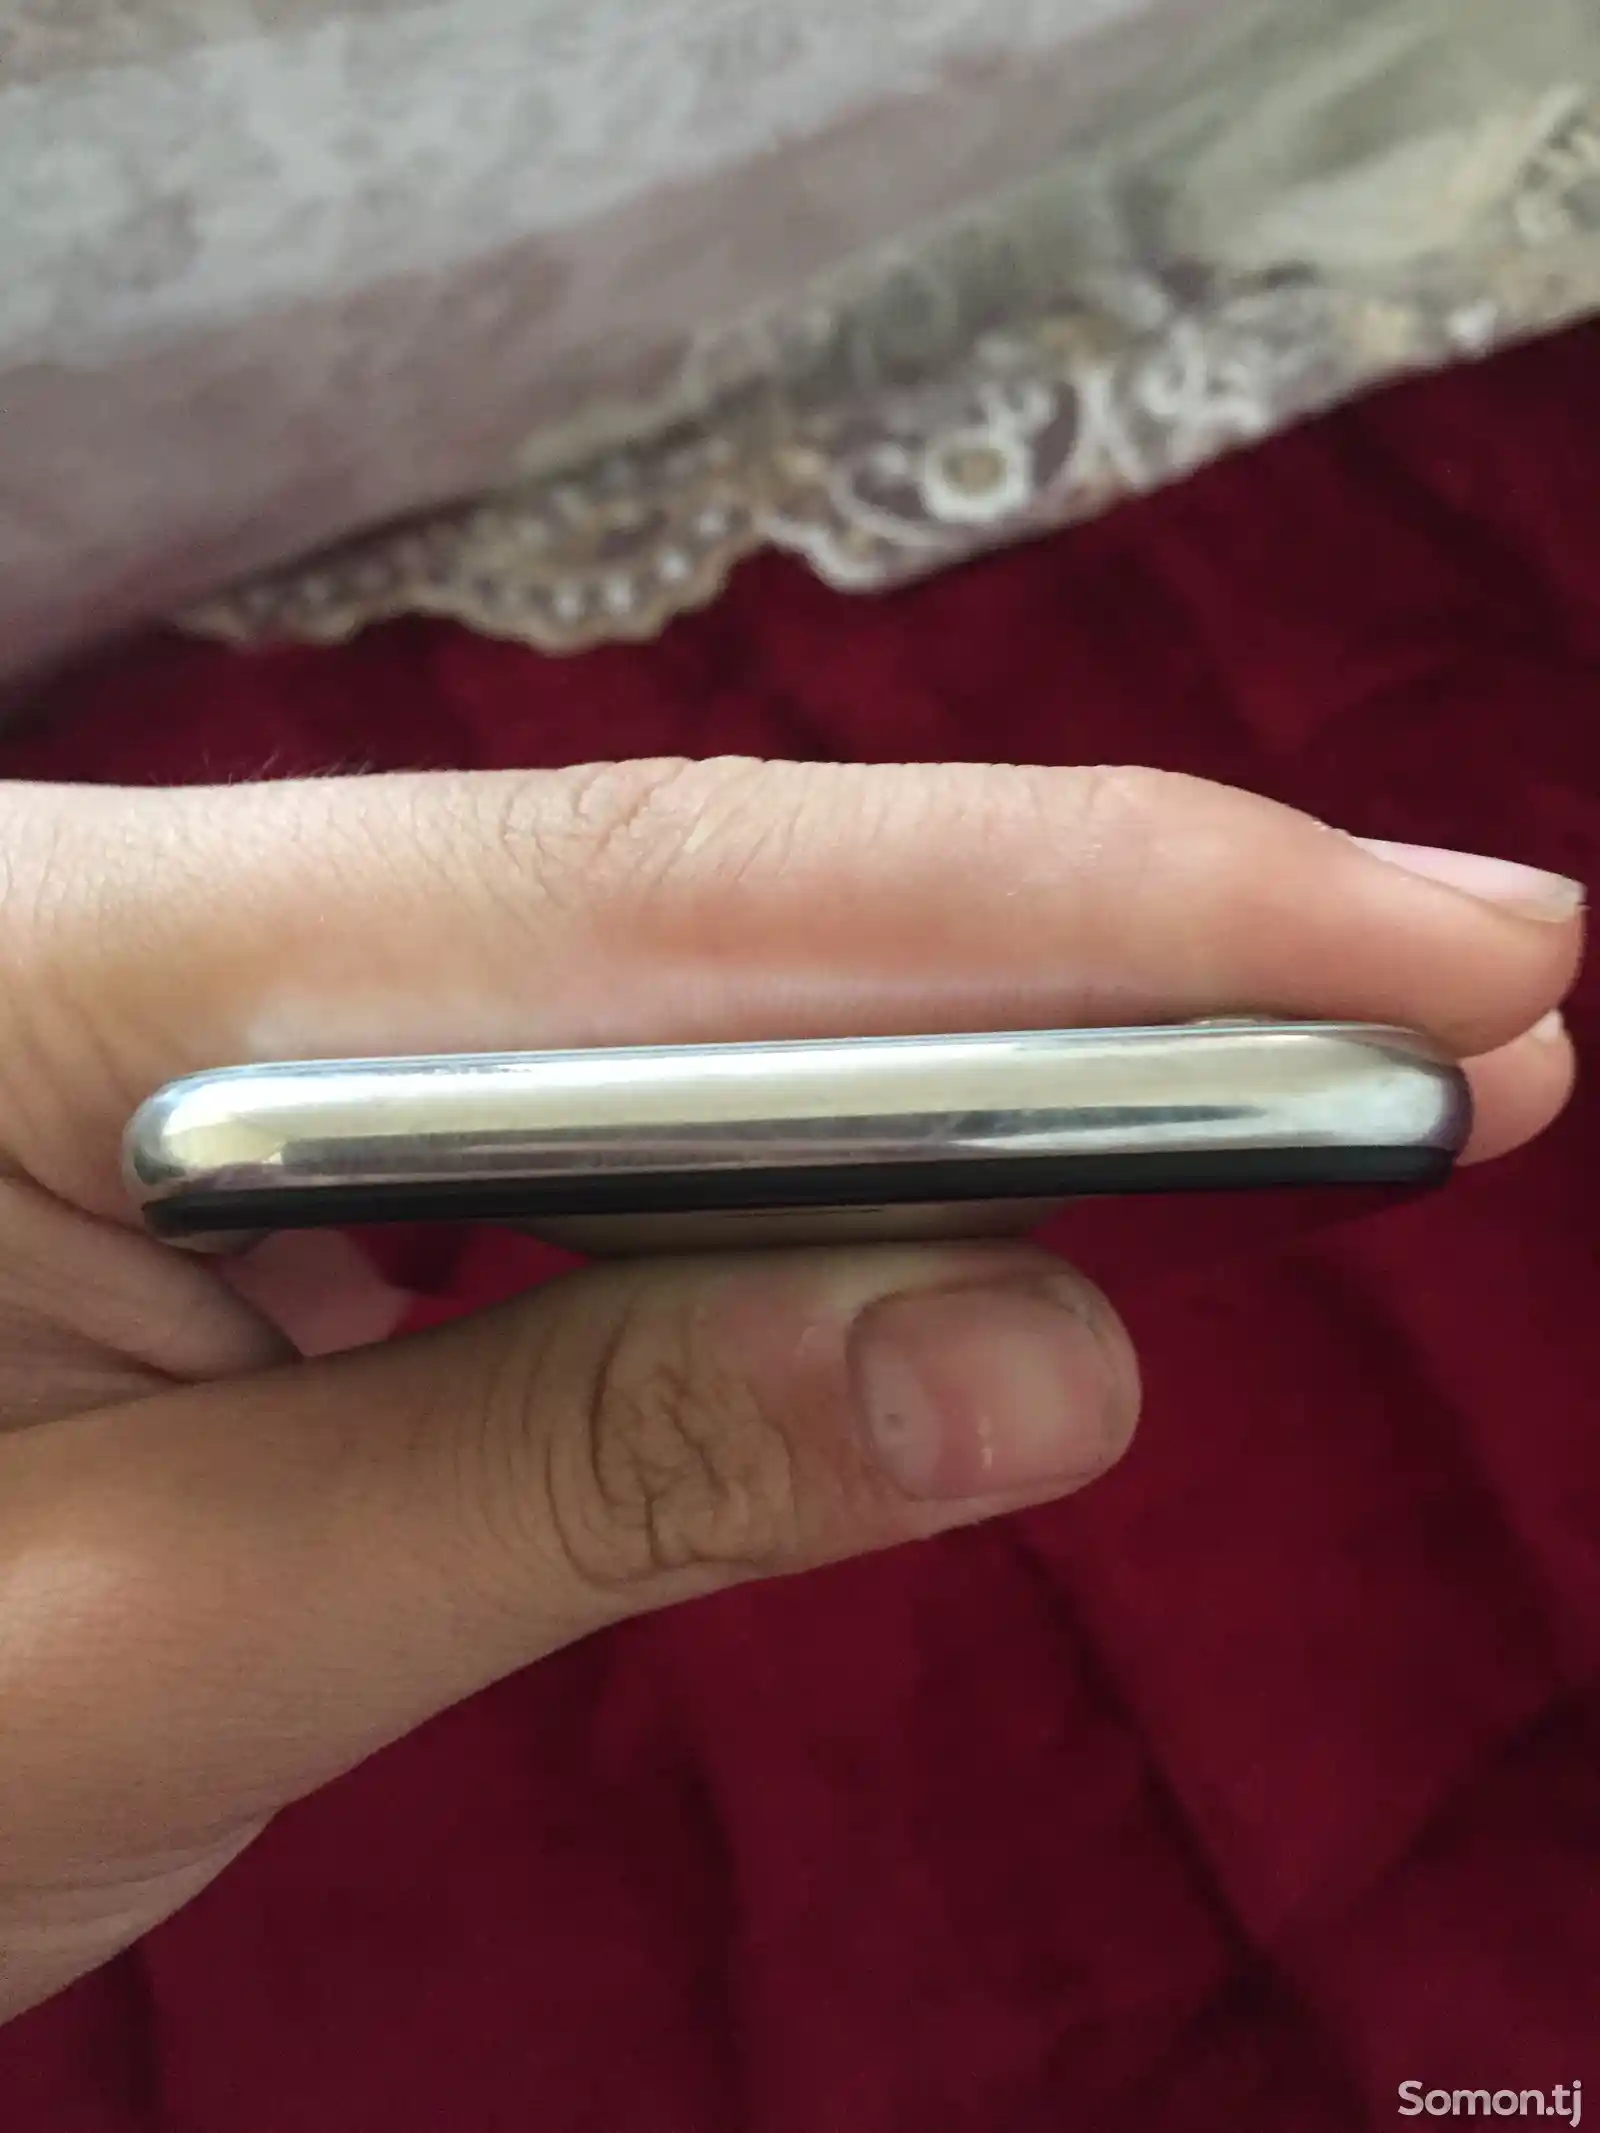 Apple iPhone X, 256 gb, Silver-7